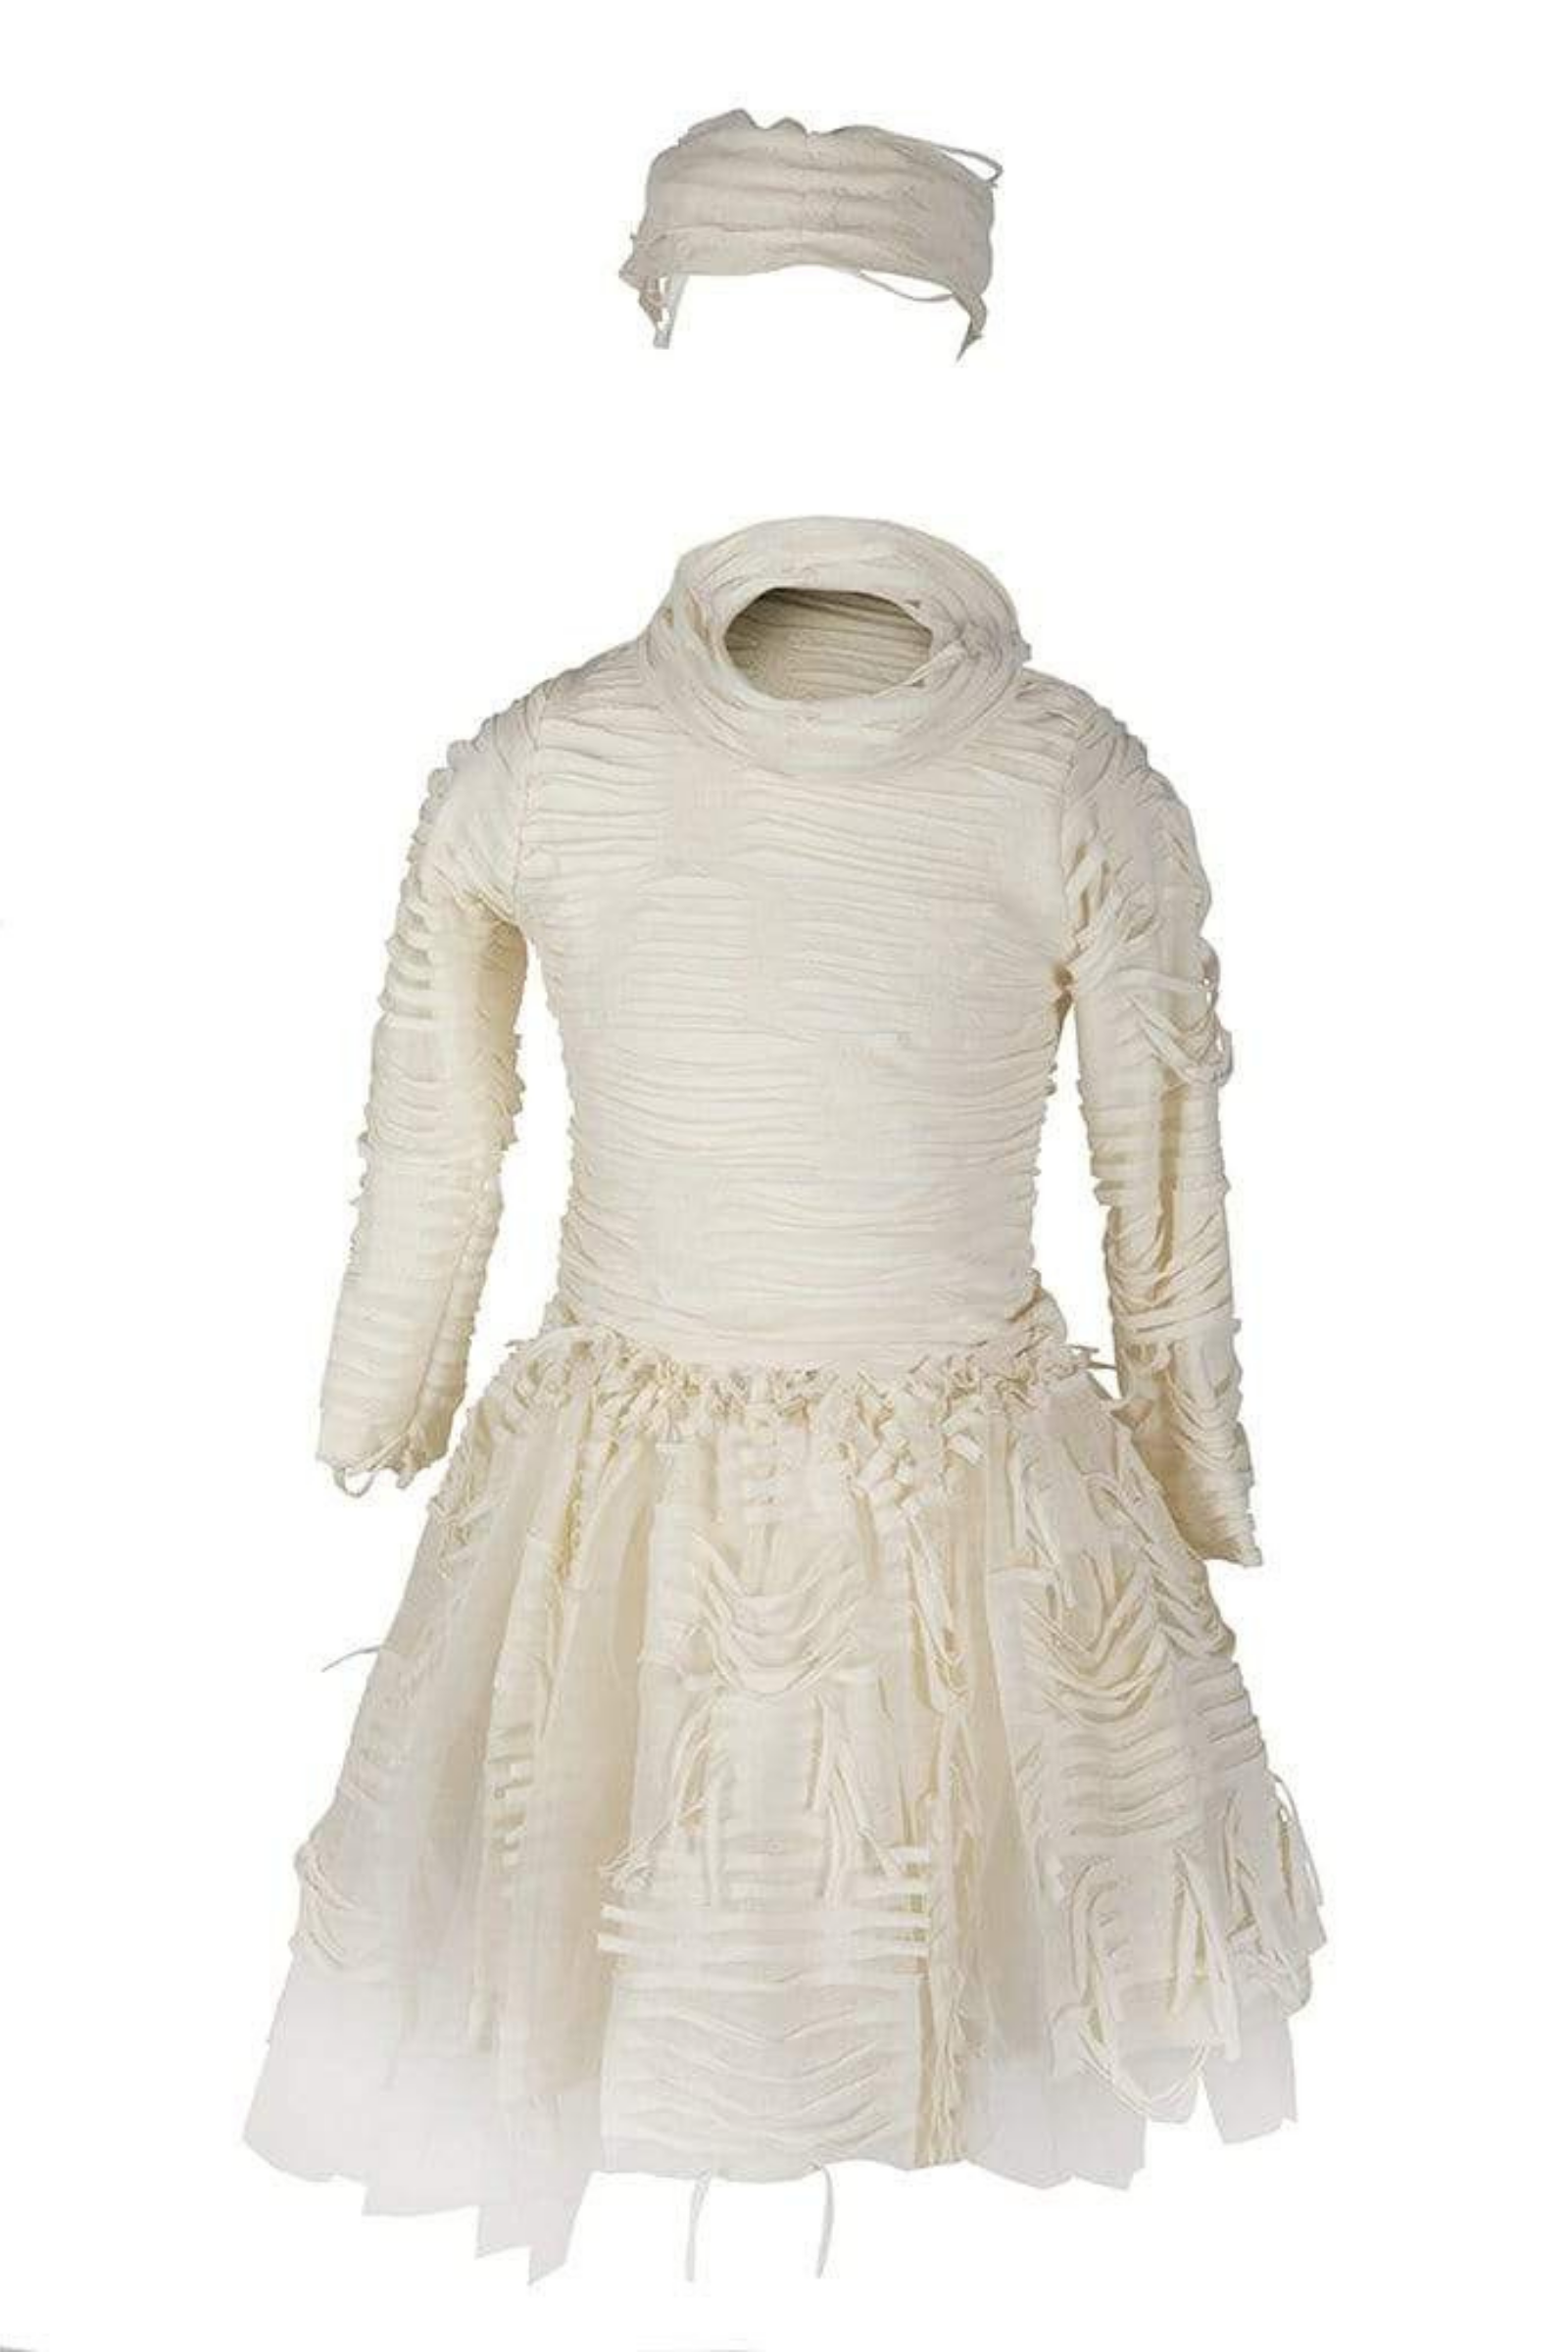 Mummy Costume with Skirt